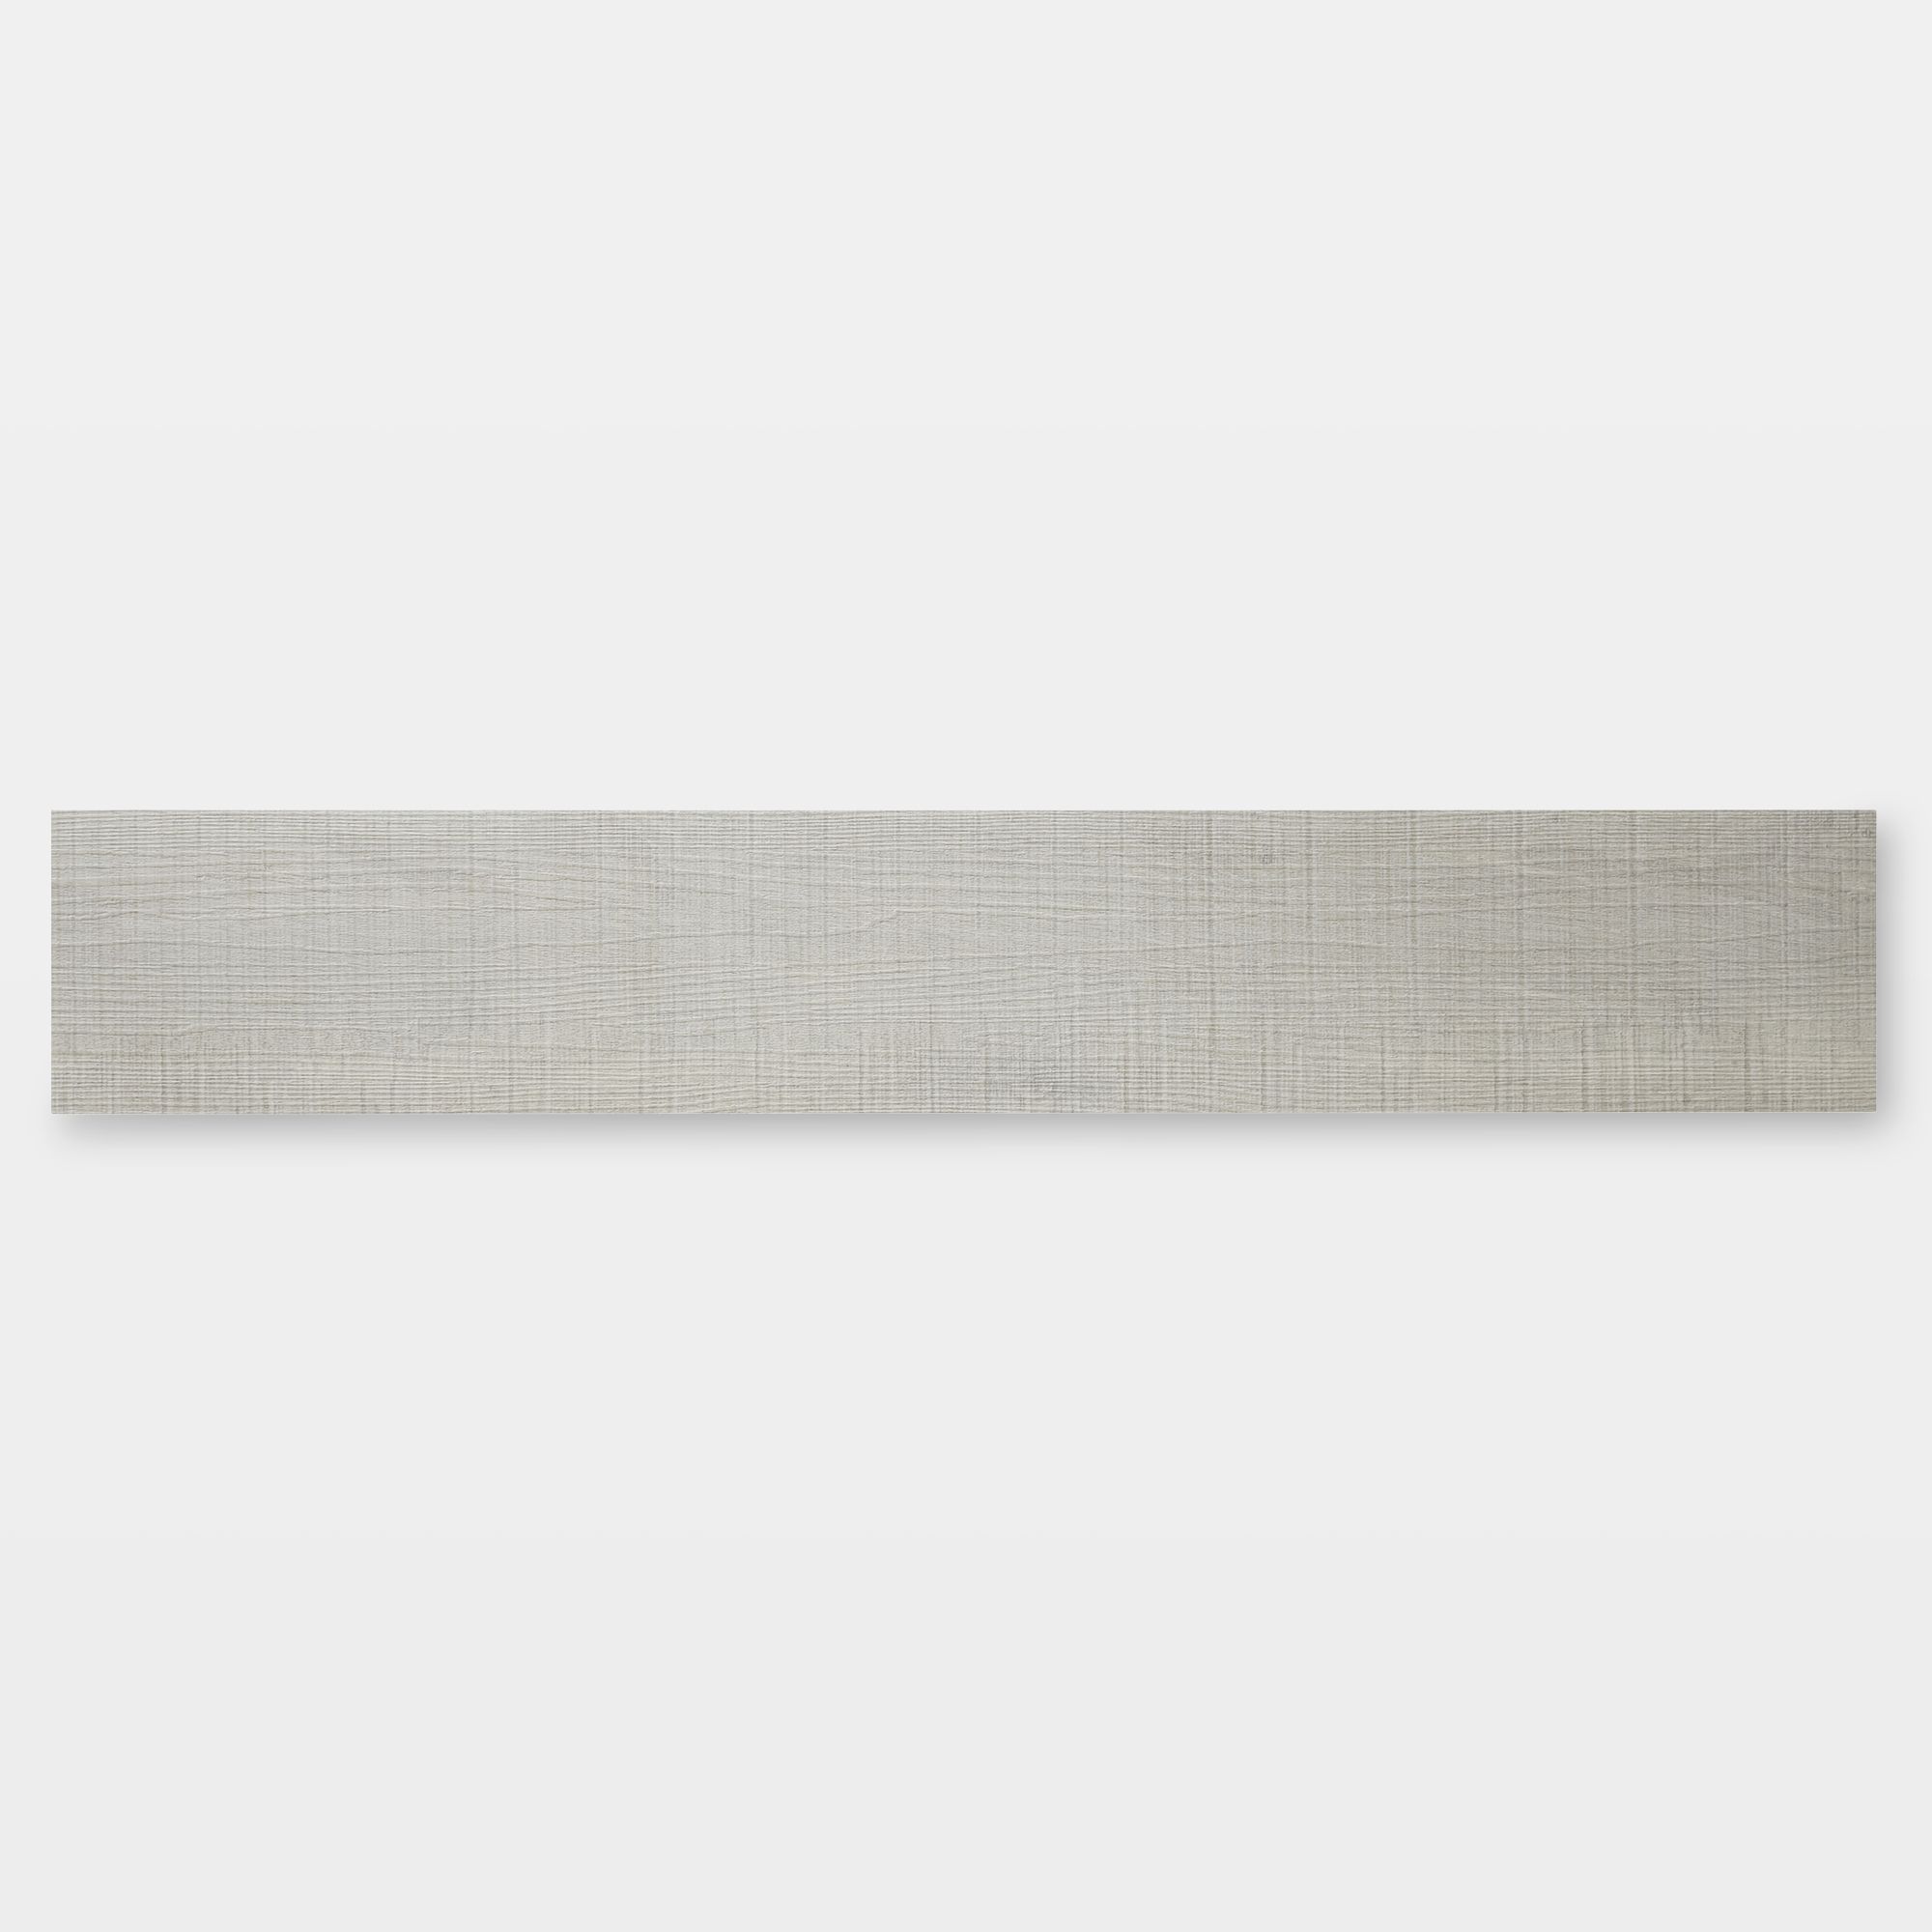 GoodHome Poprock Silver Wood planks Wood effect Self-adhesive Vinyl plank, Pack of 8